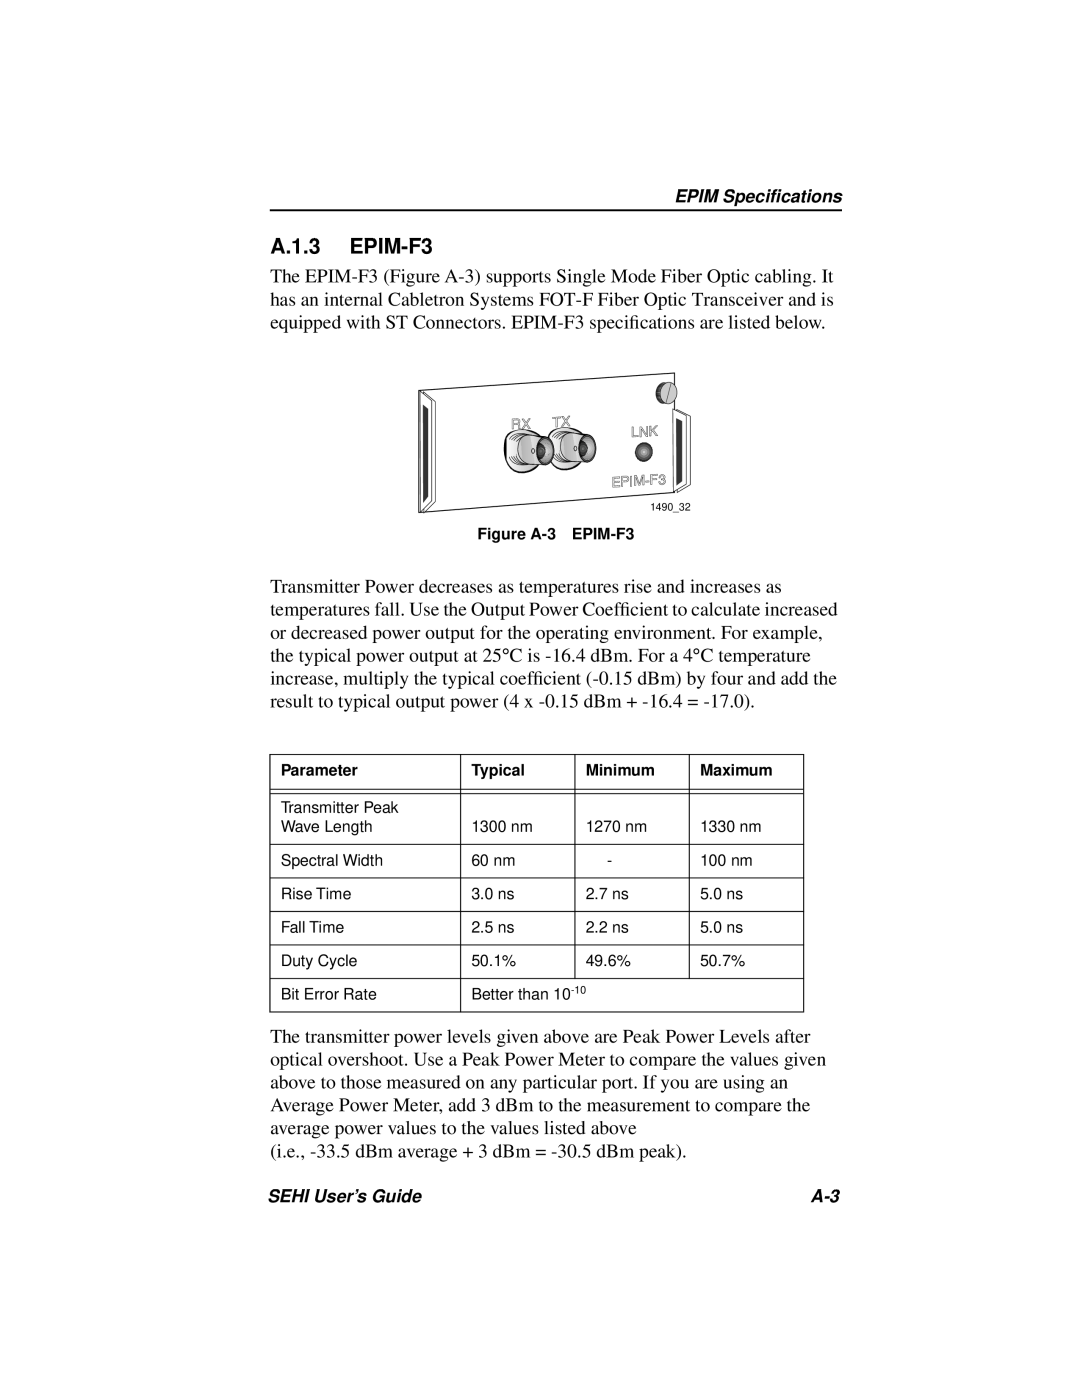 Cabletron Systems SEHI-22FL manual A.1.3 EPIM-F3 